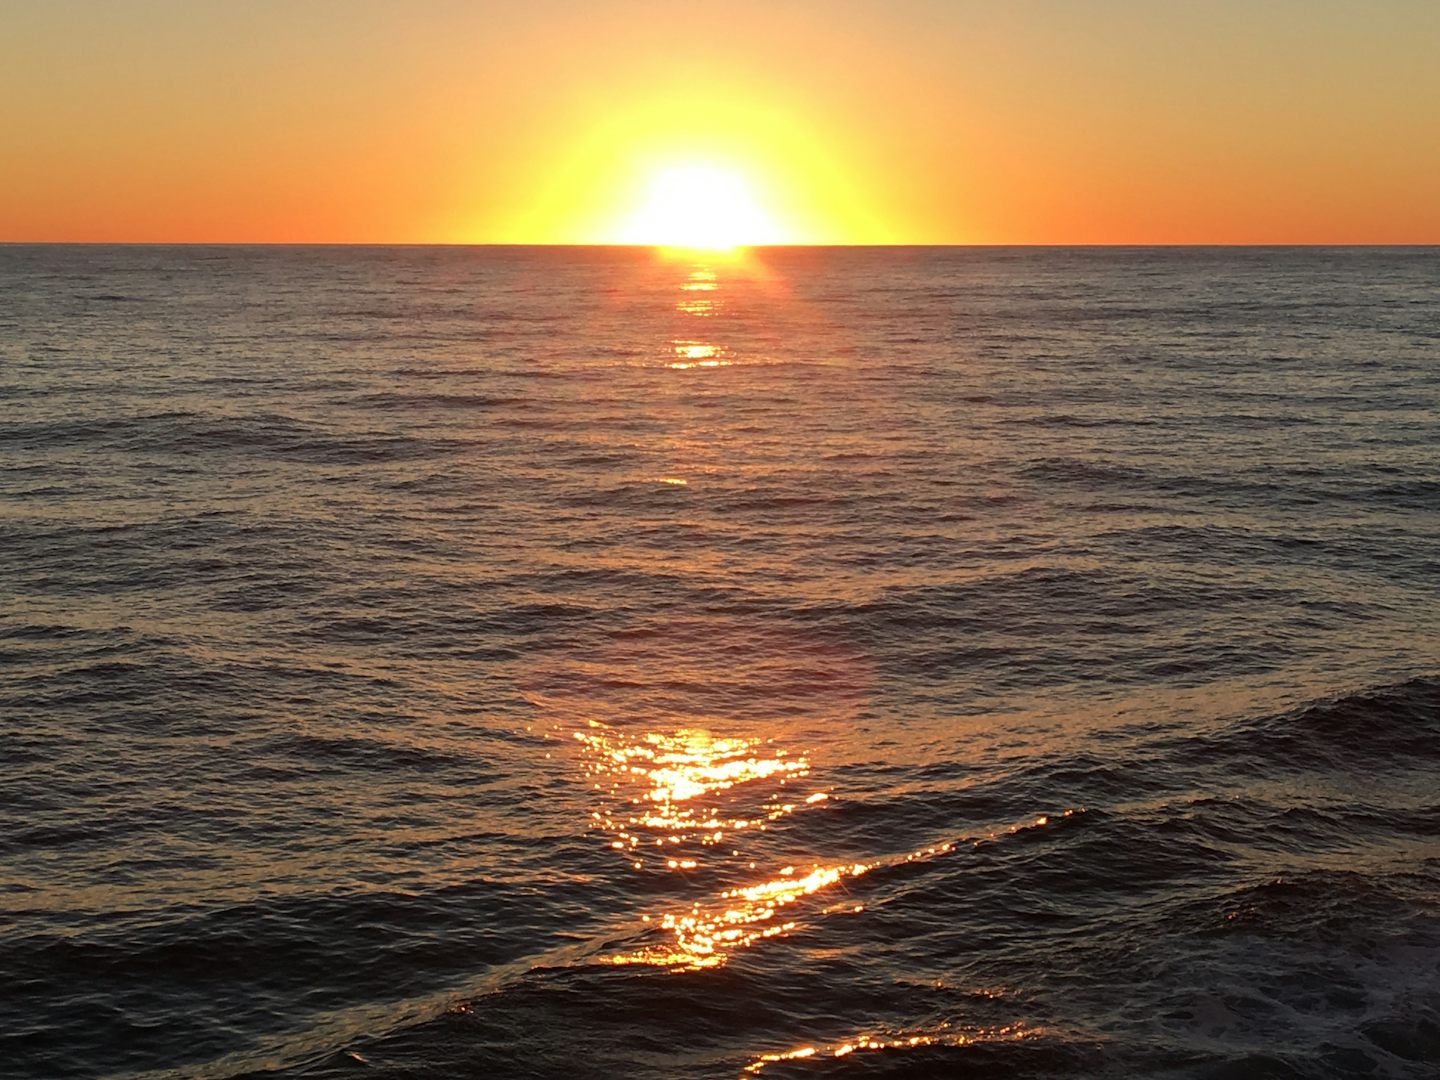 Sunrise in the Pacific Ocean